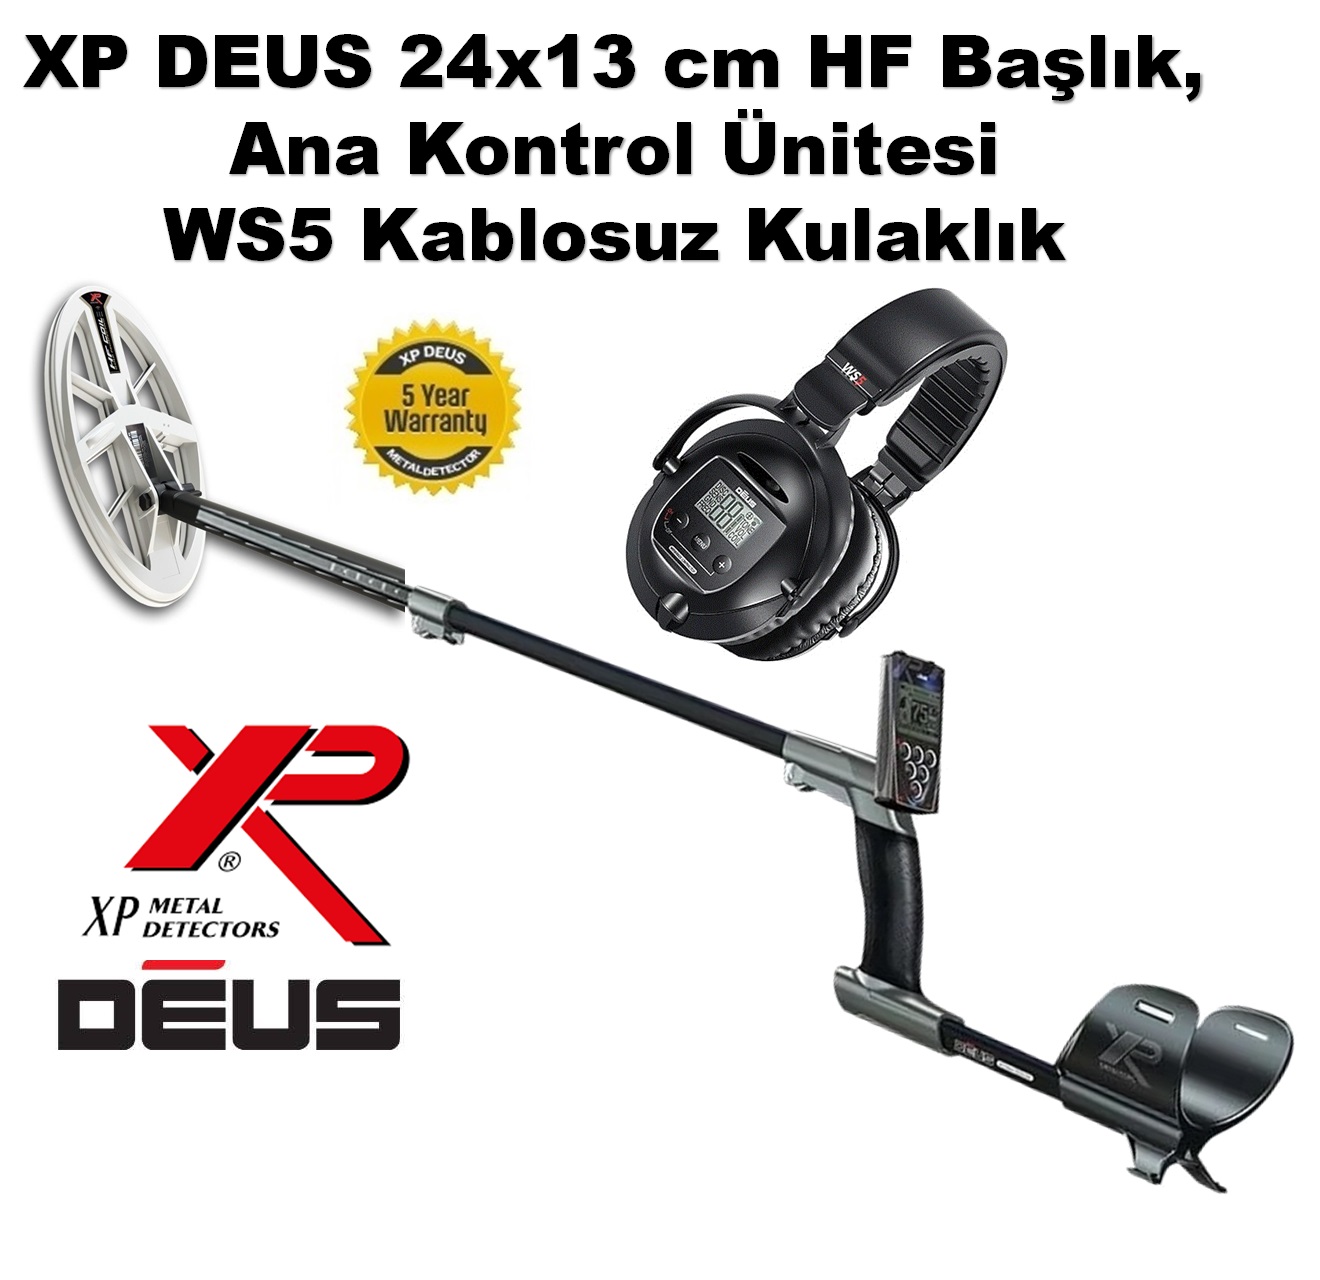 XP DEUS - 24x13cm HF Başlık, Ana Kontrol Ünitesi (RC), WS5 Kulaklık, FULL PAKET